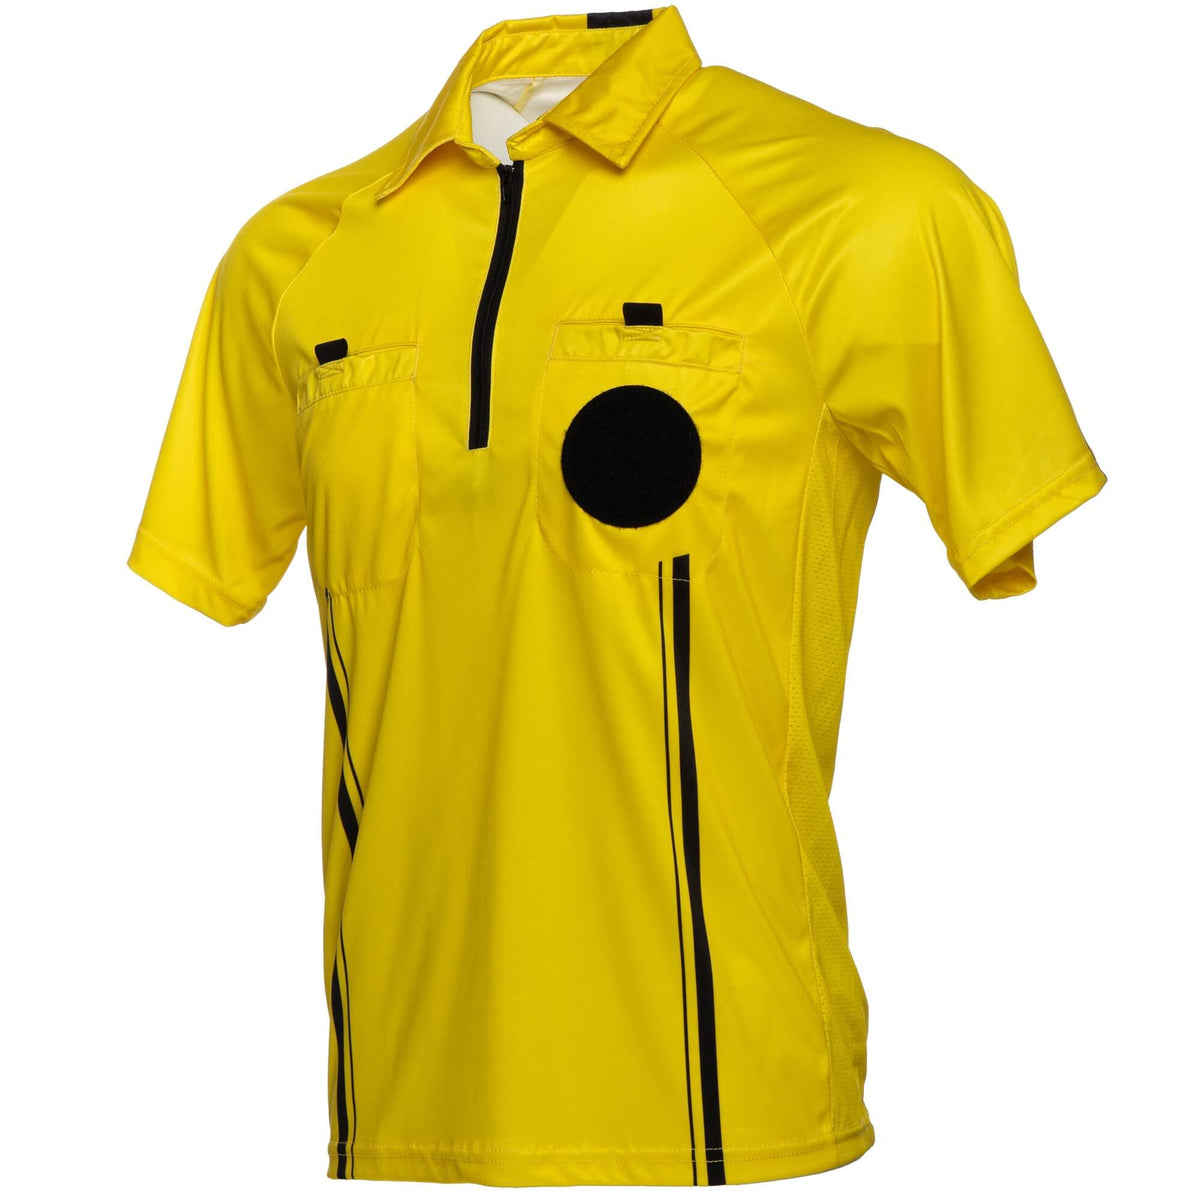 Brava Yellow New Ussf Pro Soccer Referee Jersey